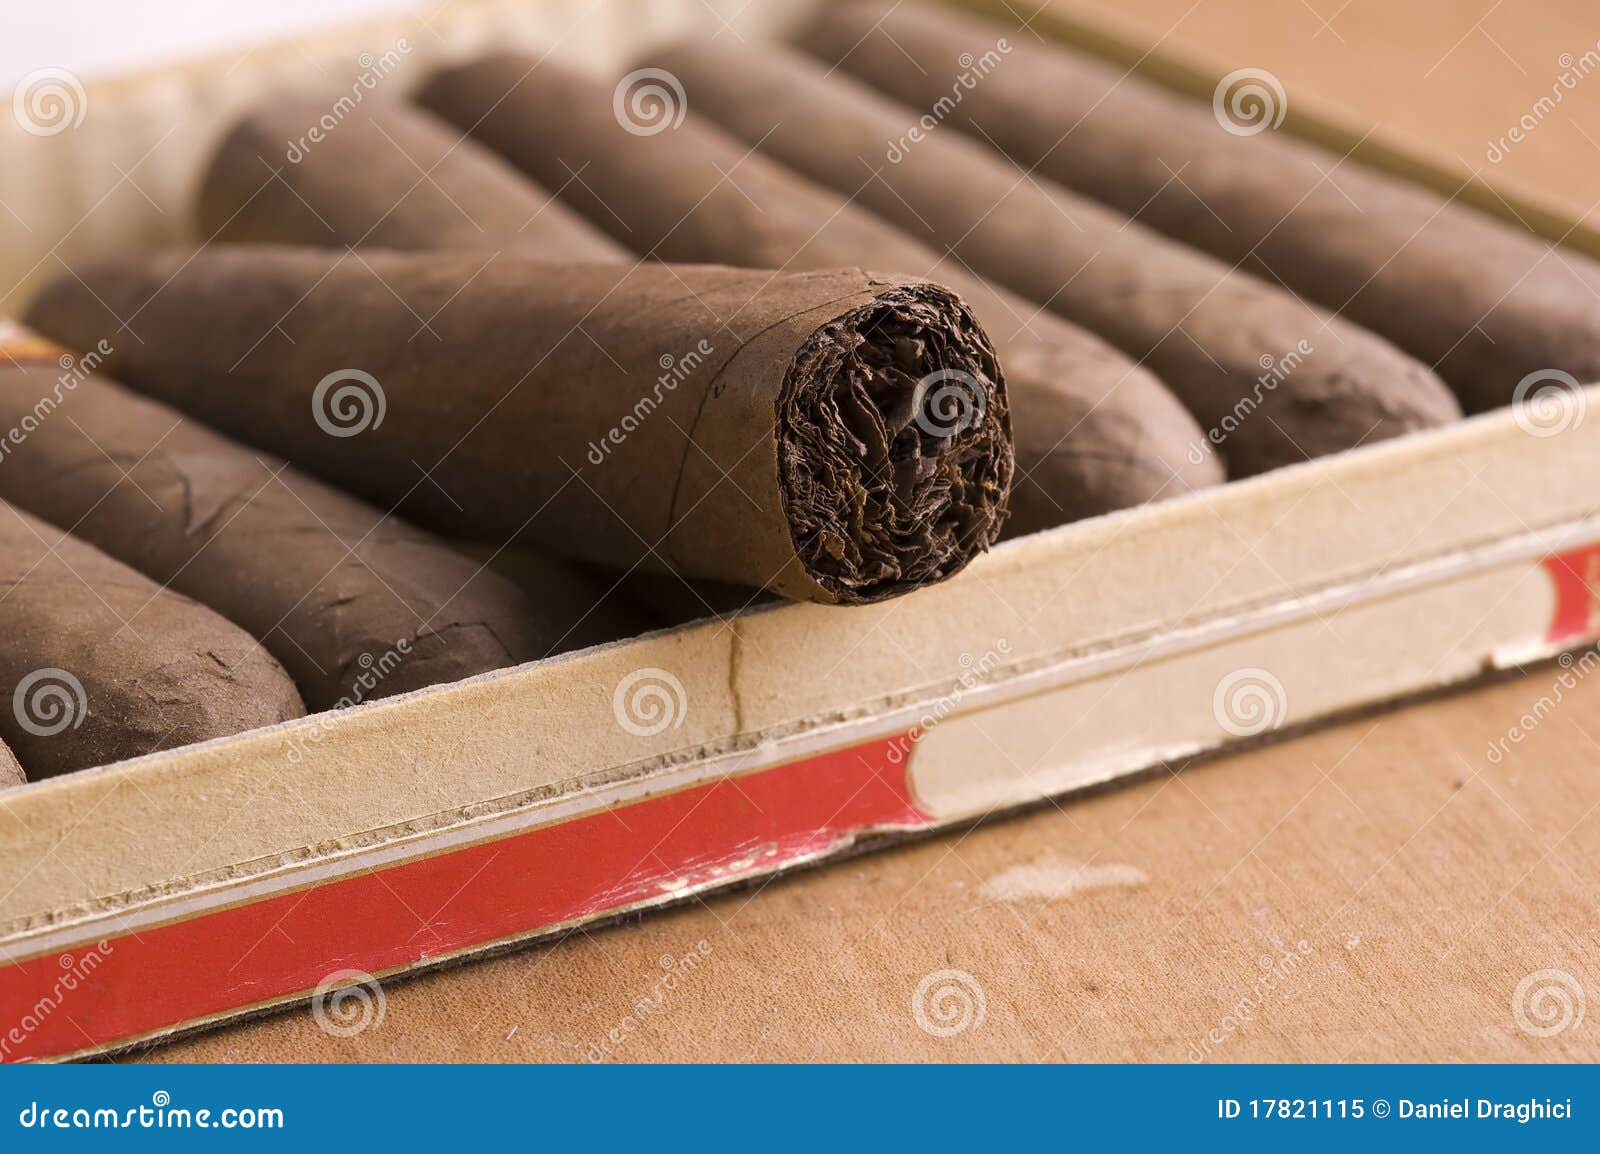 cuban cigars in box